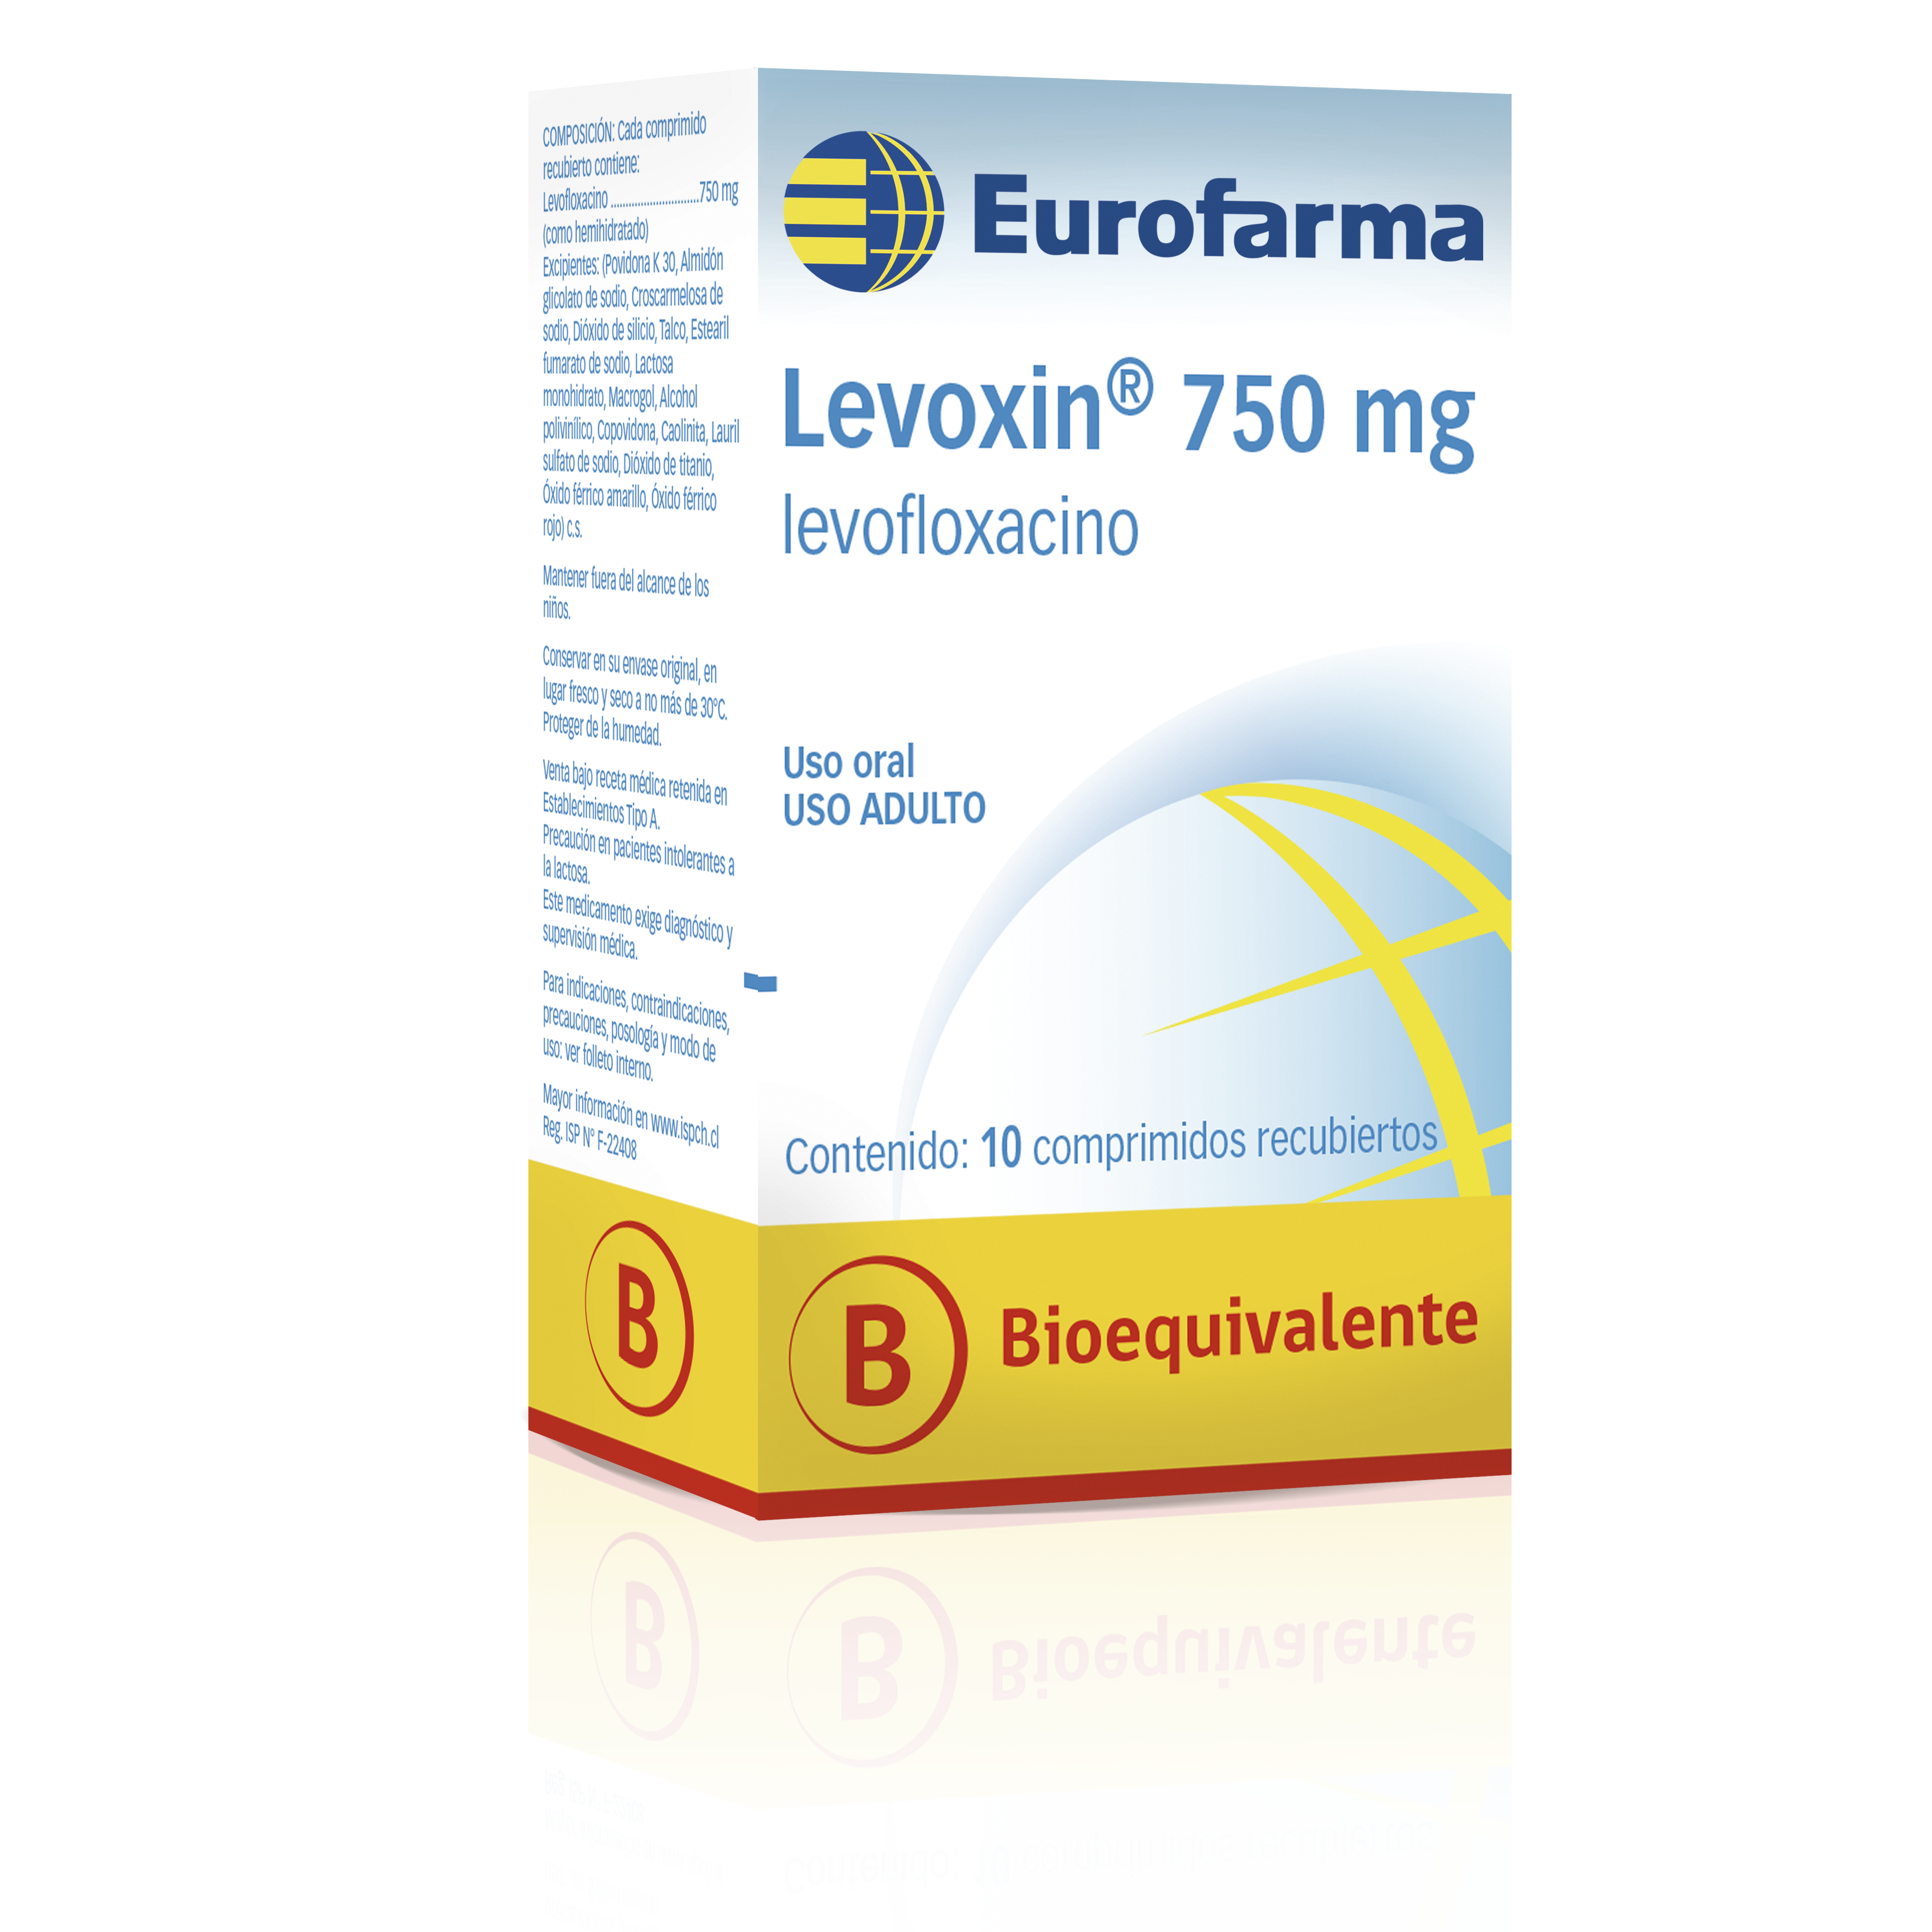 Levoxin 750 mg. (Levofloxacino) bioequivalente